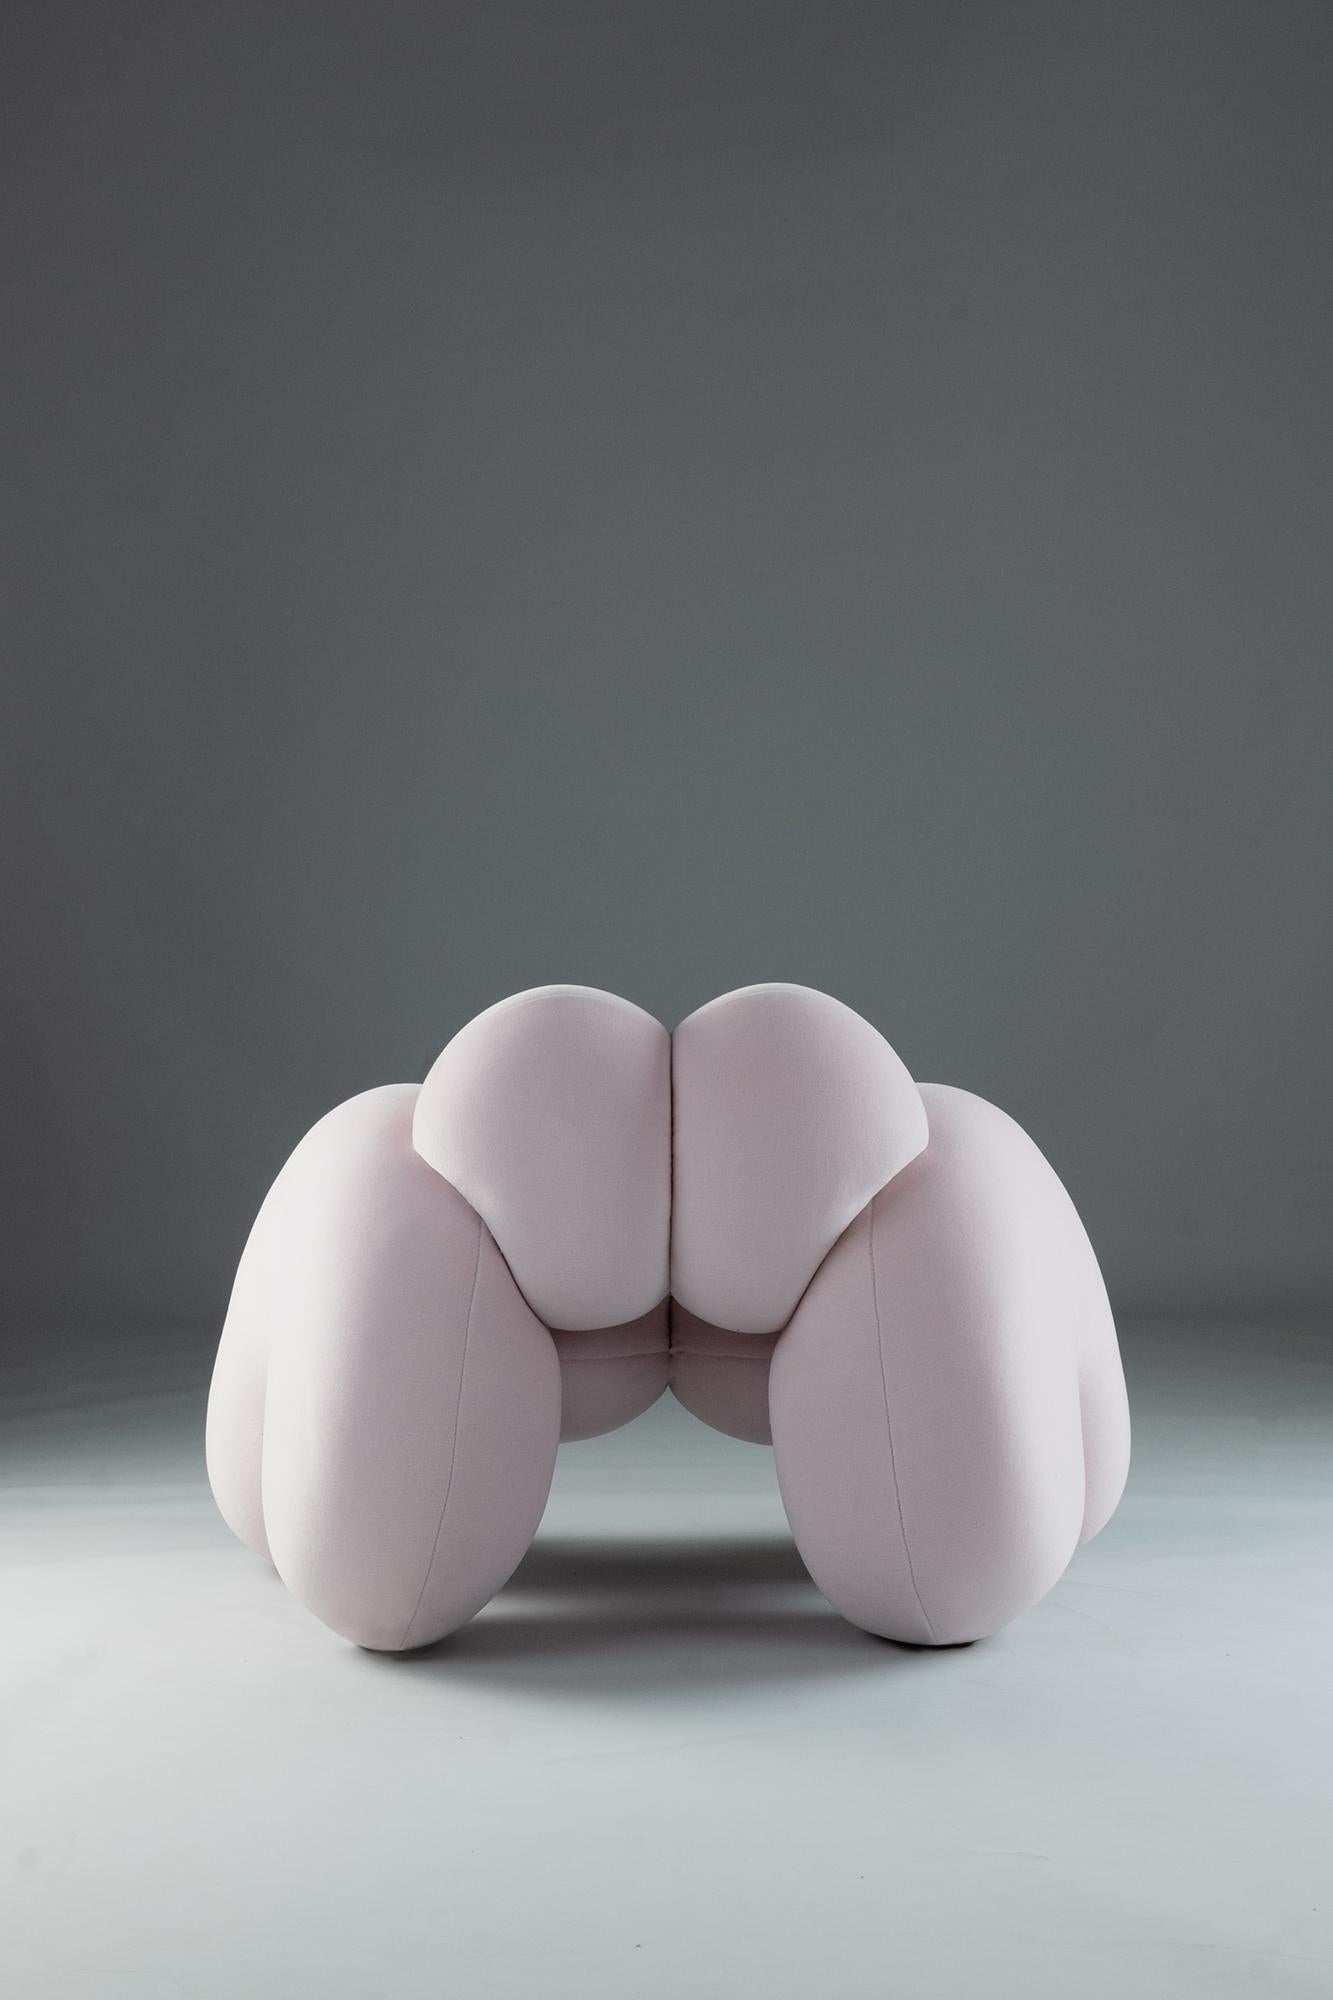 English Derrière Chair by Lara Bohinc, Orange Velvet Fabric, Organic Shape, Armchair For Sale